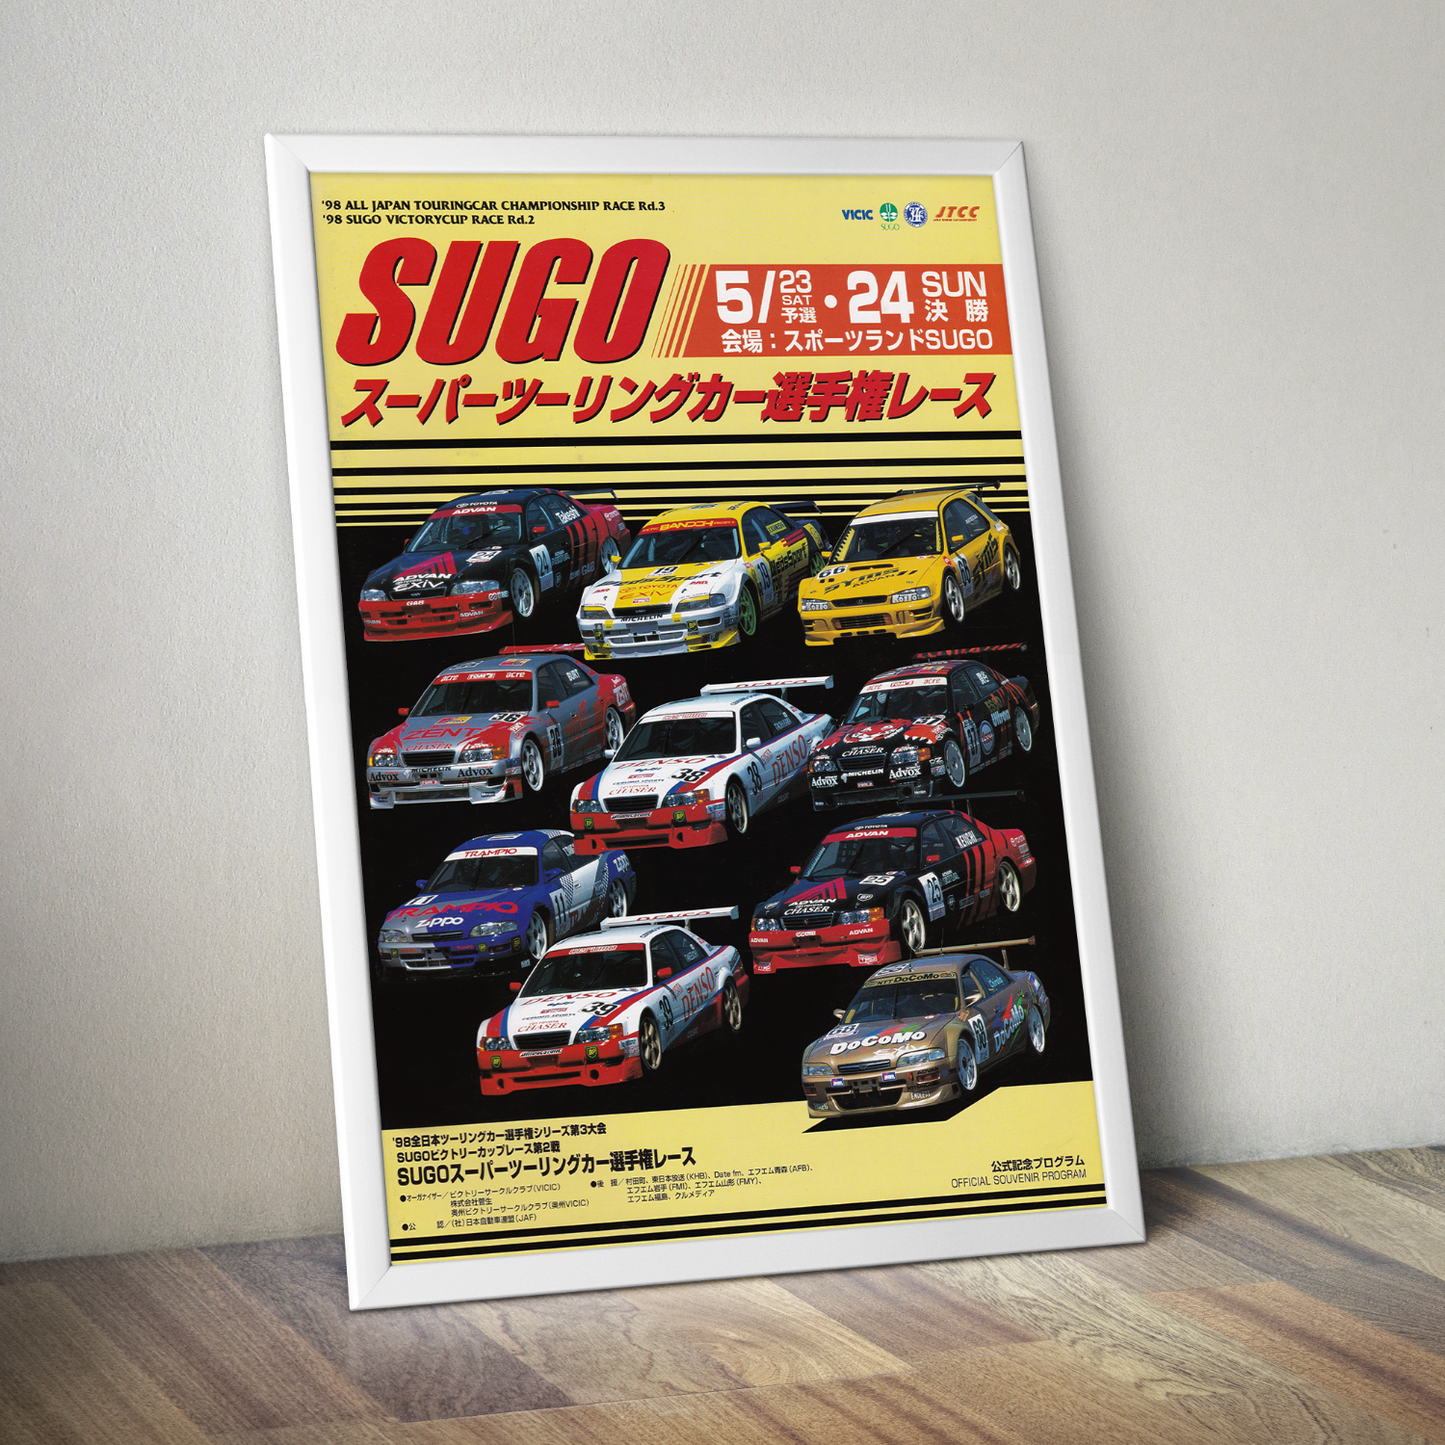 Sugu 1998 jtcc race Rd.3 poster